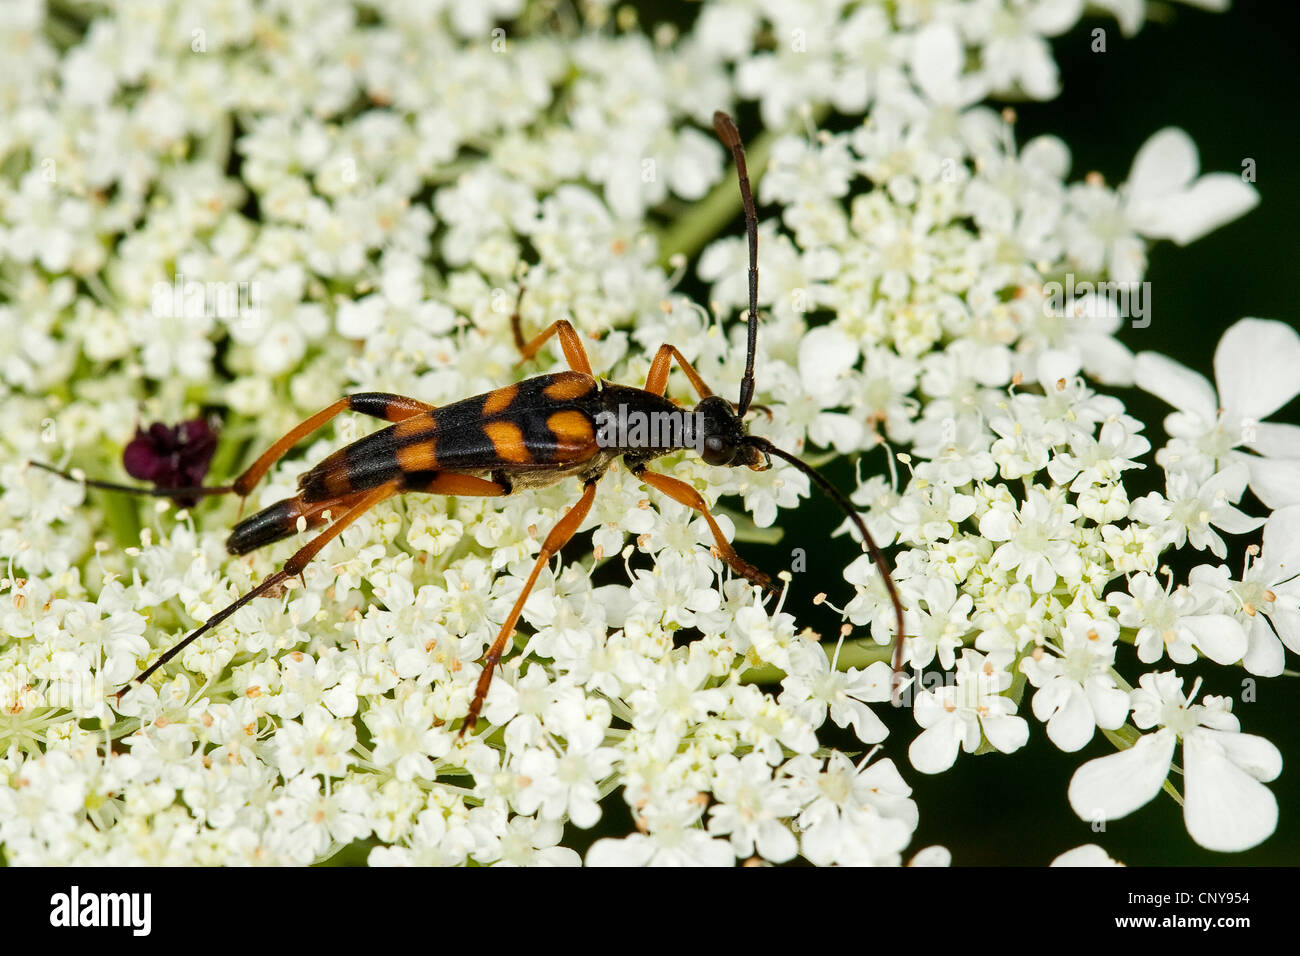 Long-horned beetle (Strangalia attenuata, Typocerus attenuata, Leptura attenuata), on blossoms, Germany Stock Photo